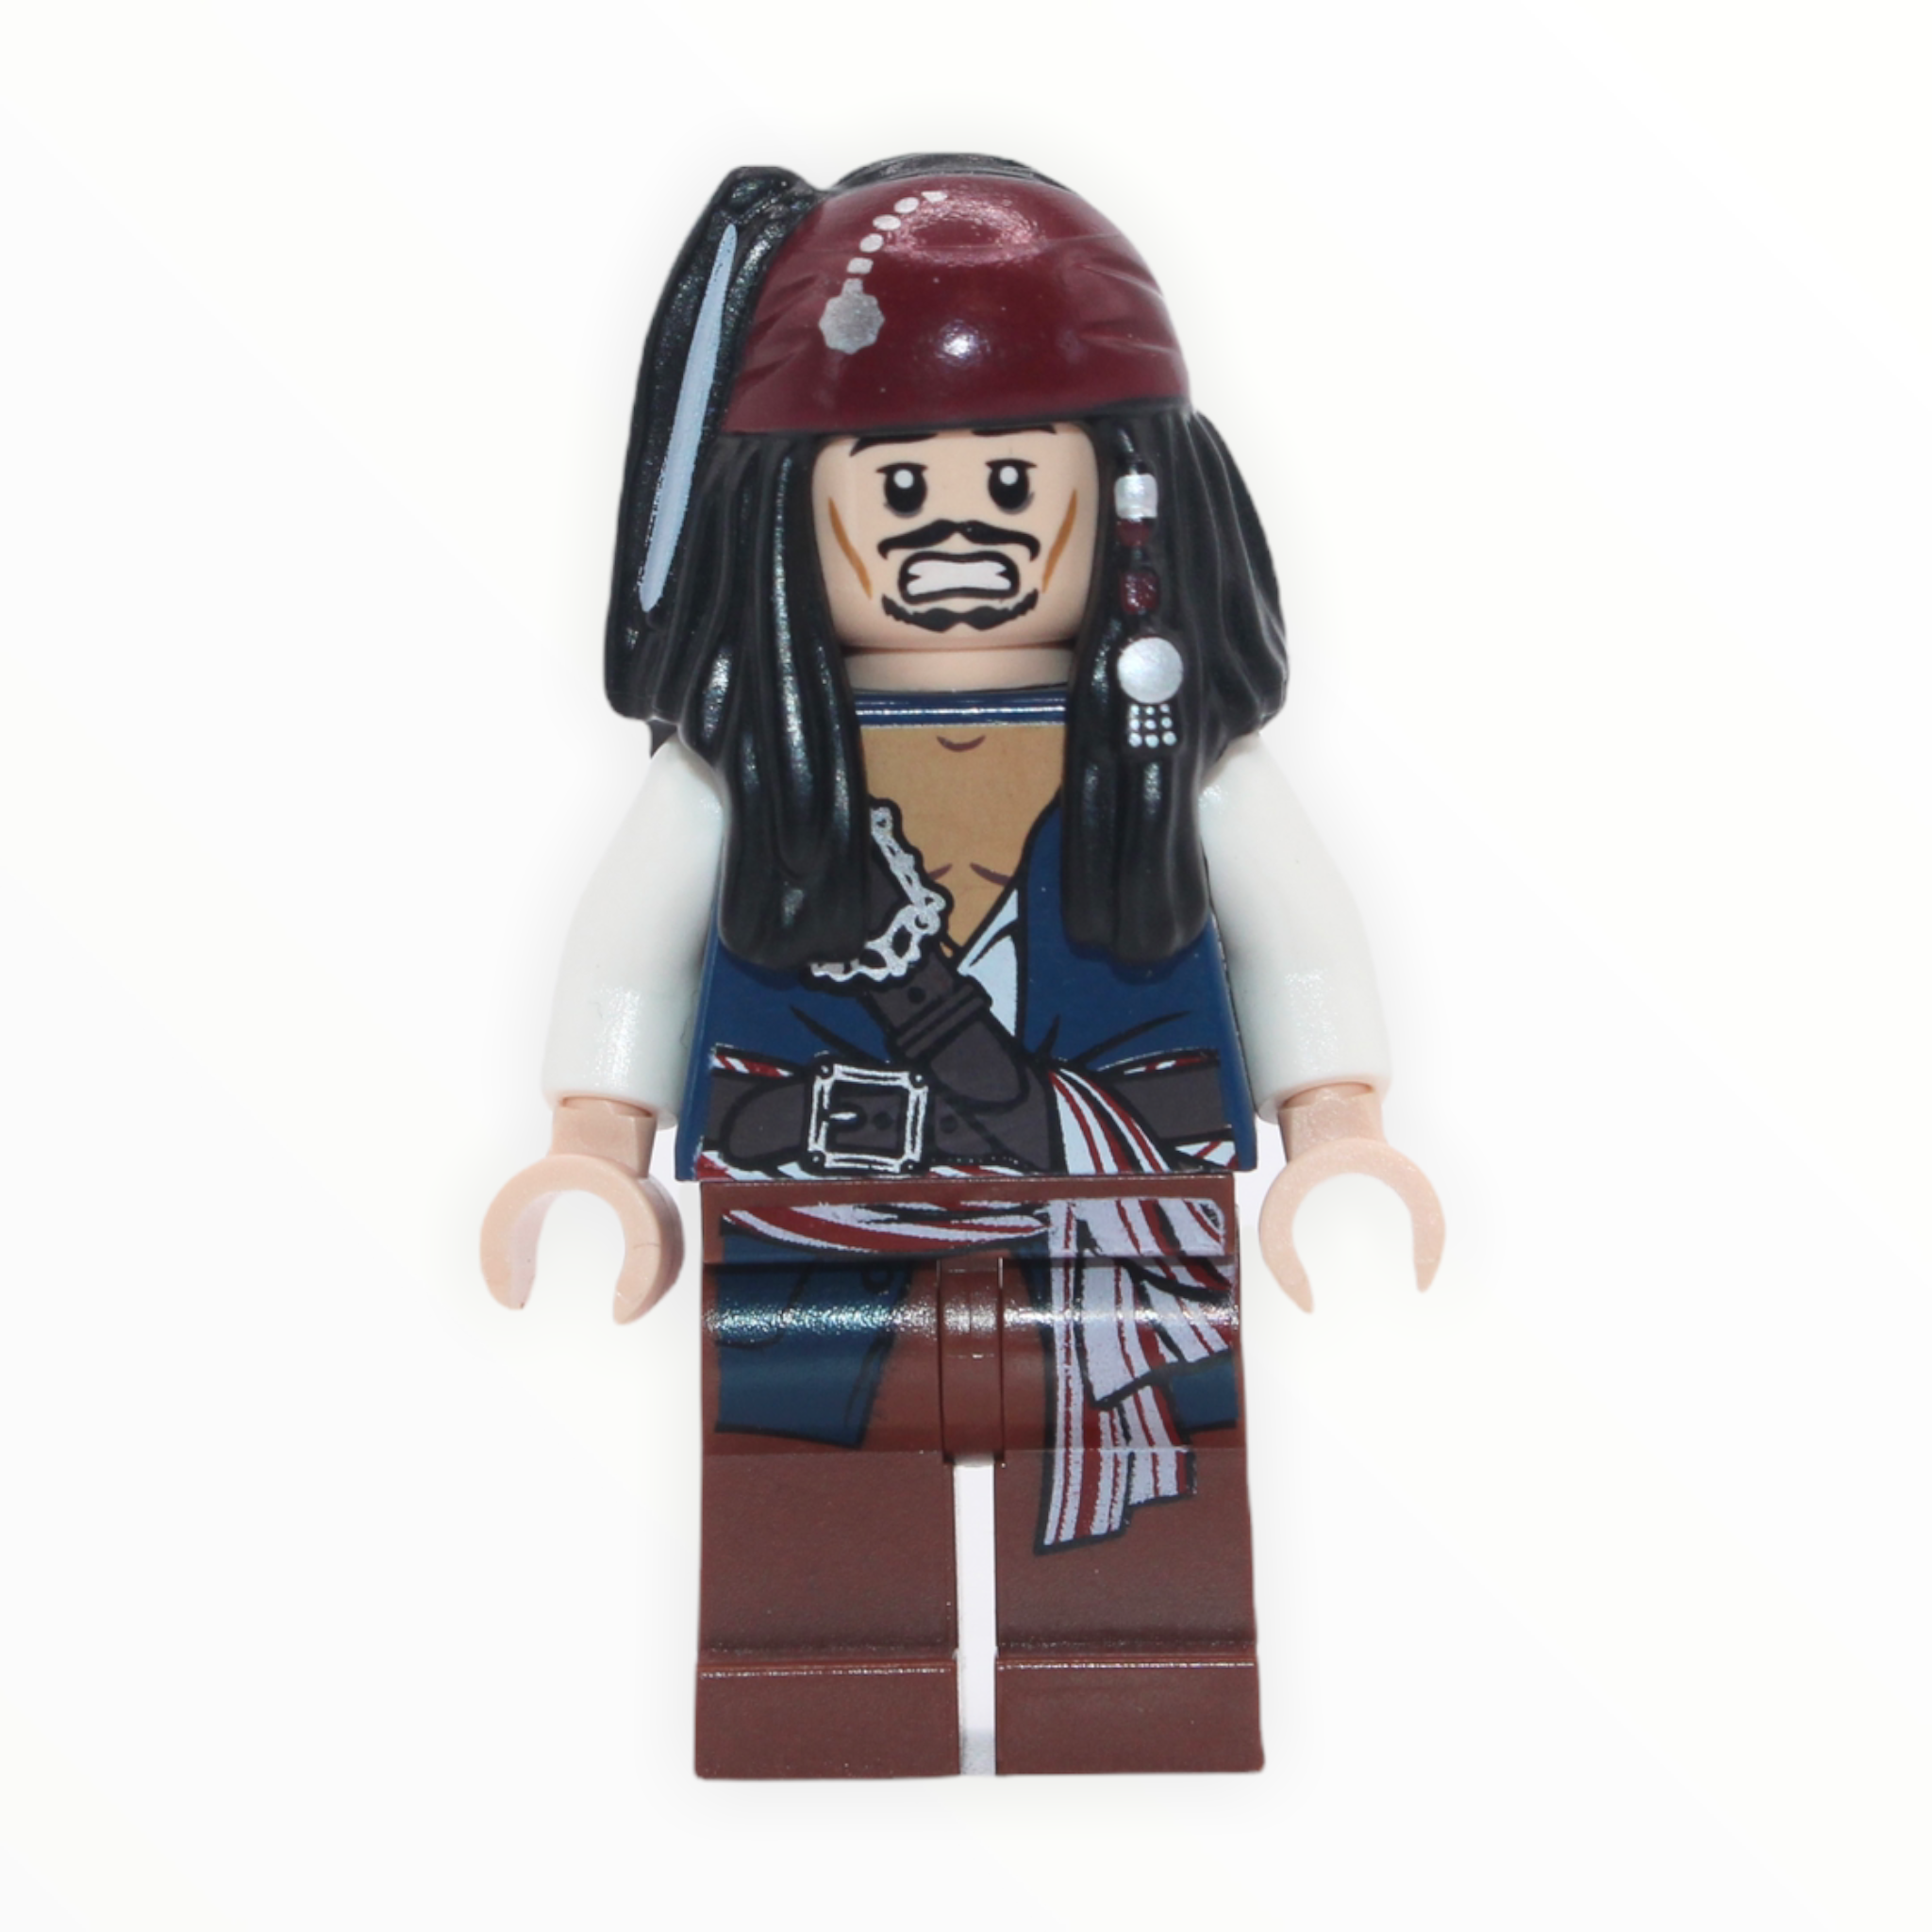 Captain Jack Sparrow (smile / scared)